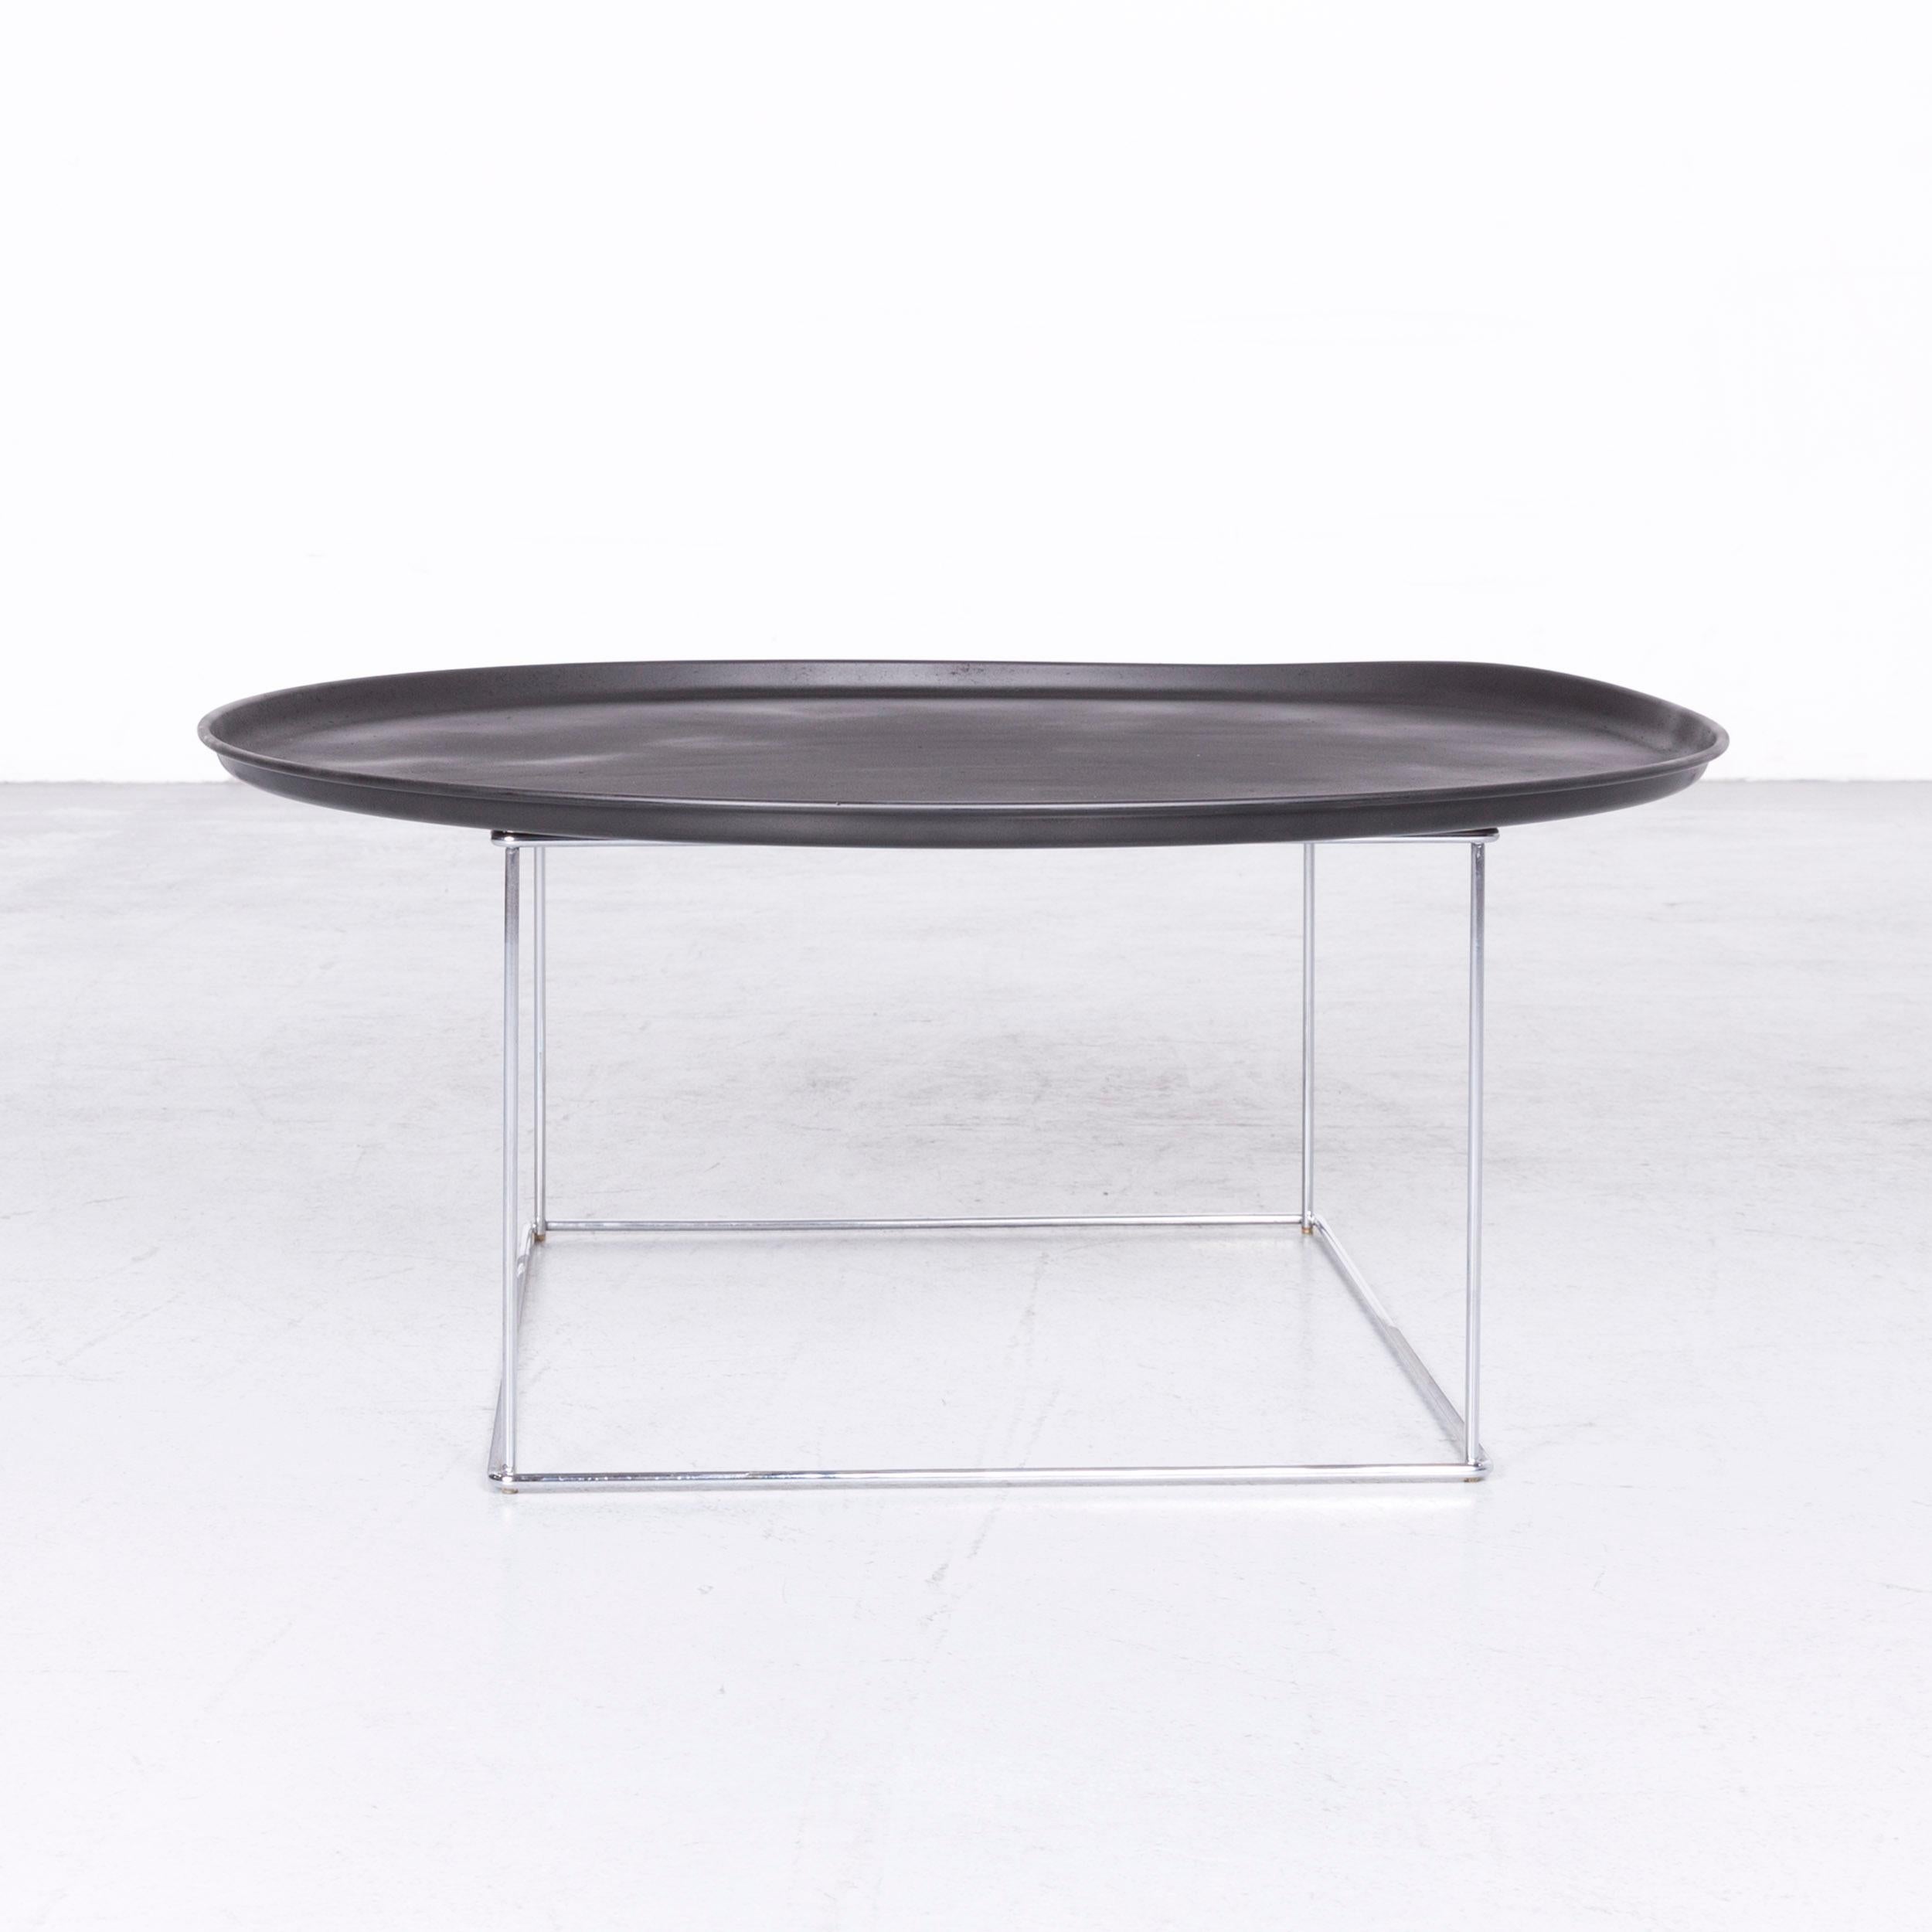 Contemporary B&B Italia Fat-Fat Designer Table Black Metal Coffee Table